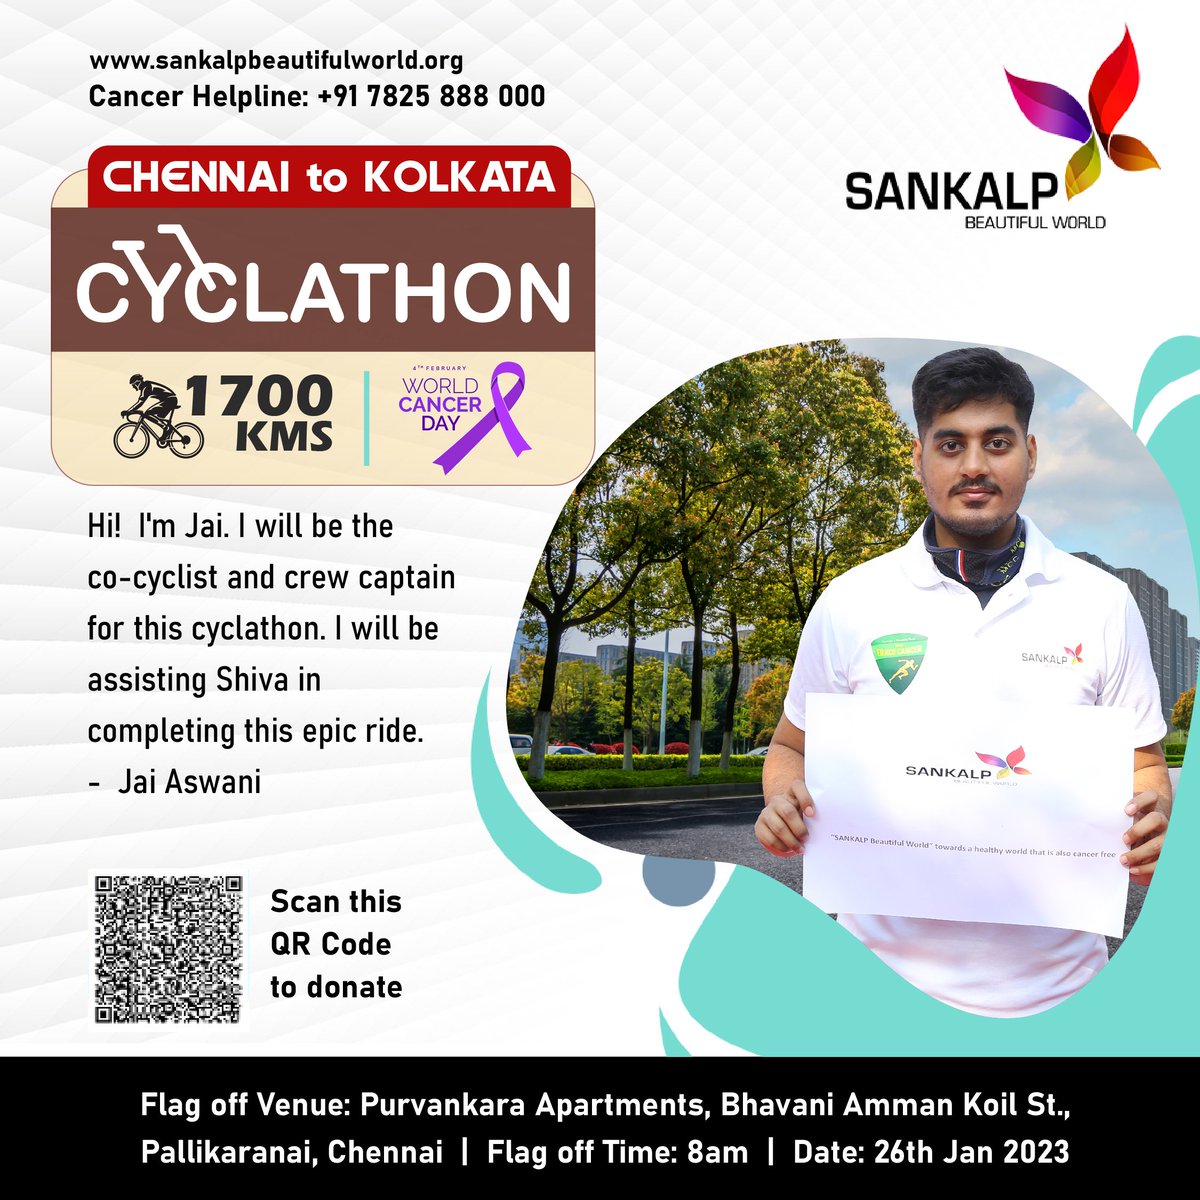 Together we can make real progress in reducing the global impact of cancer - Mr. Jaipreet Aswani, Co Cyclist & Crew Captain. 
#WorldCancerDay #closethecaregap #cancerfreeworld #SankalpBeautifulWorld @uicc @arvindkmurthy @latchumanadhas @Shiva70368235 @WinB2w